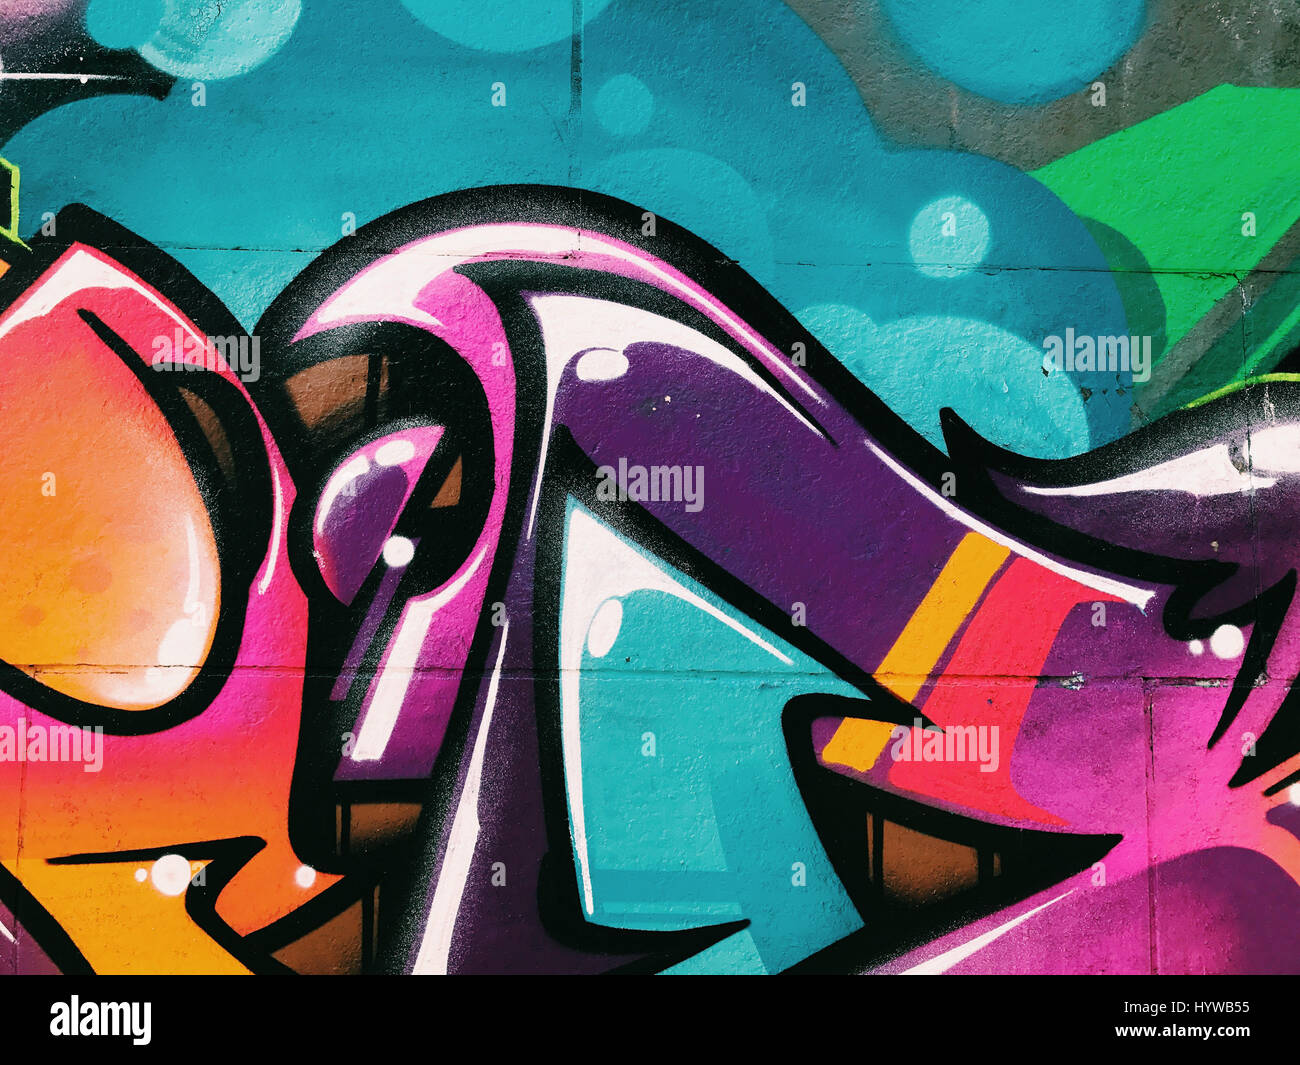 Graffiti Wall Background Urban Street Art Design Stock Photo Alamy